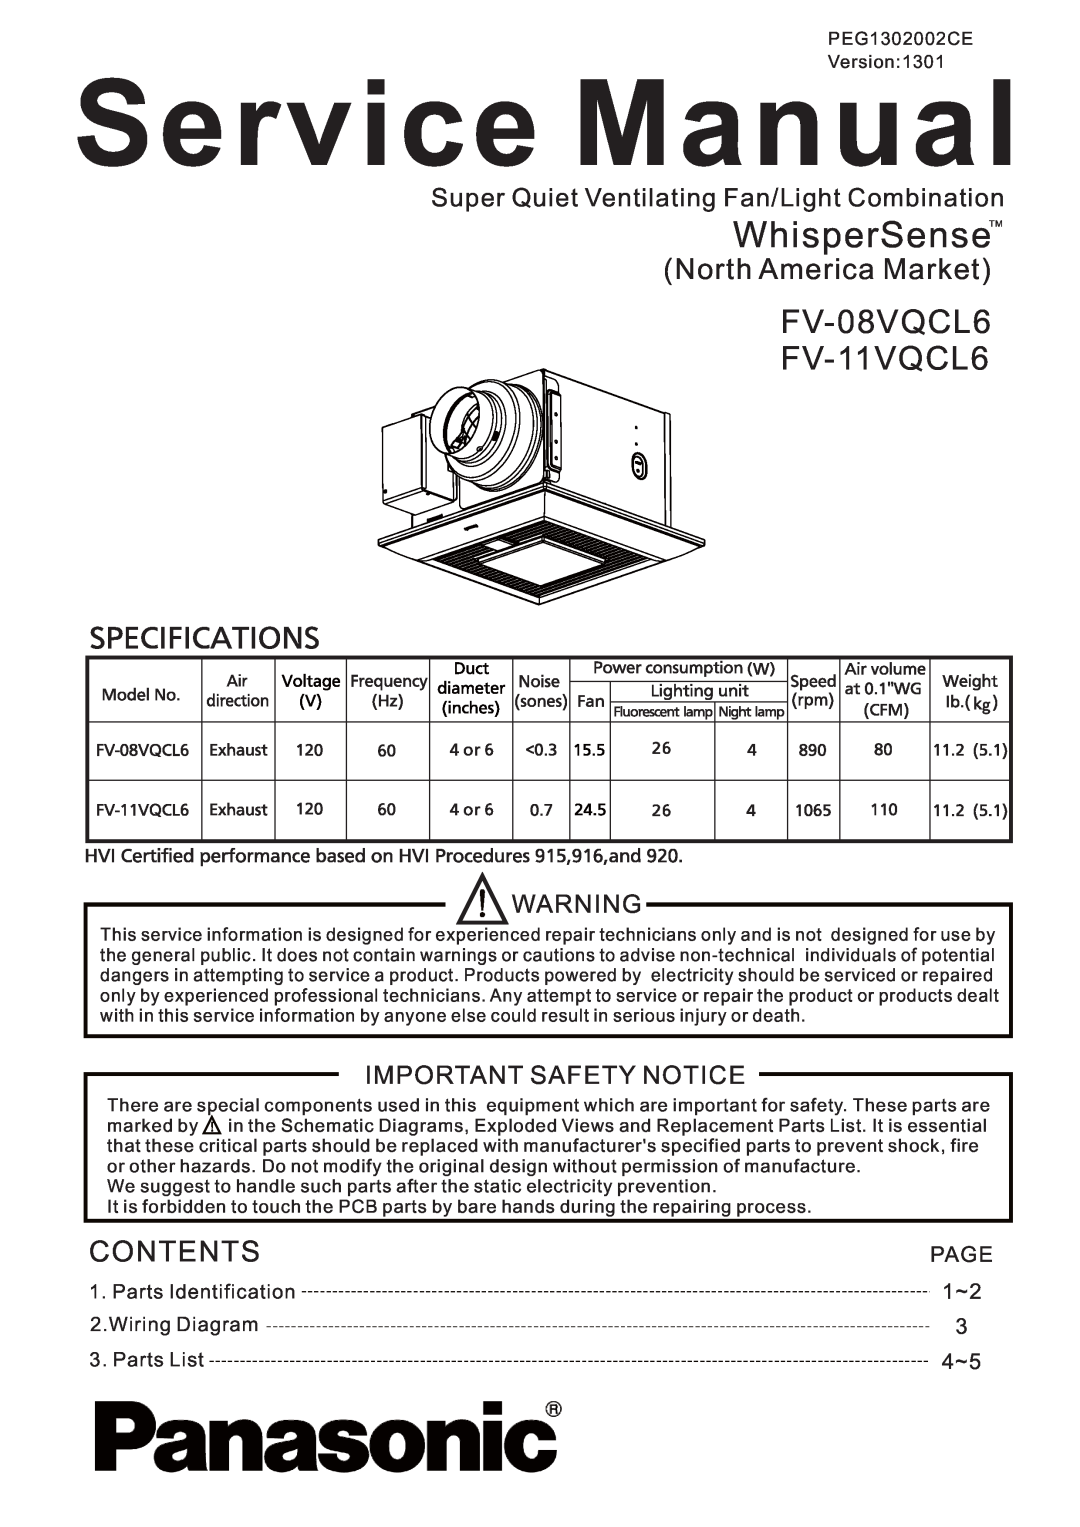 Panasonic service manual FV-08VQCL6 FV-11VQCL6, Page, WhisperSenseTM, North America Market, Contents 